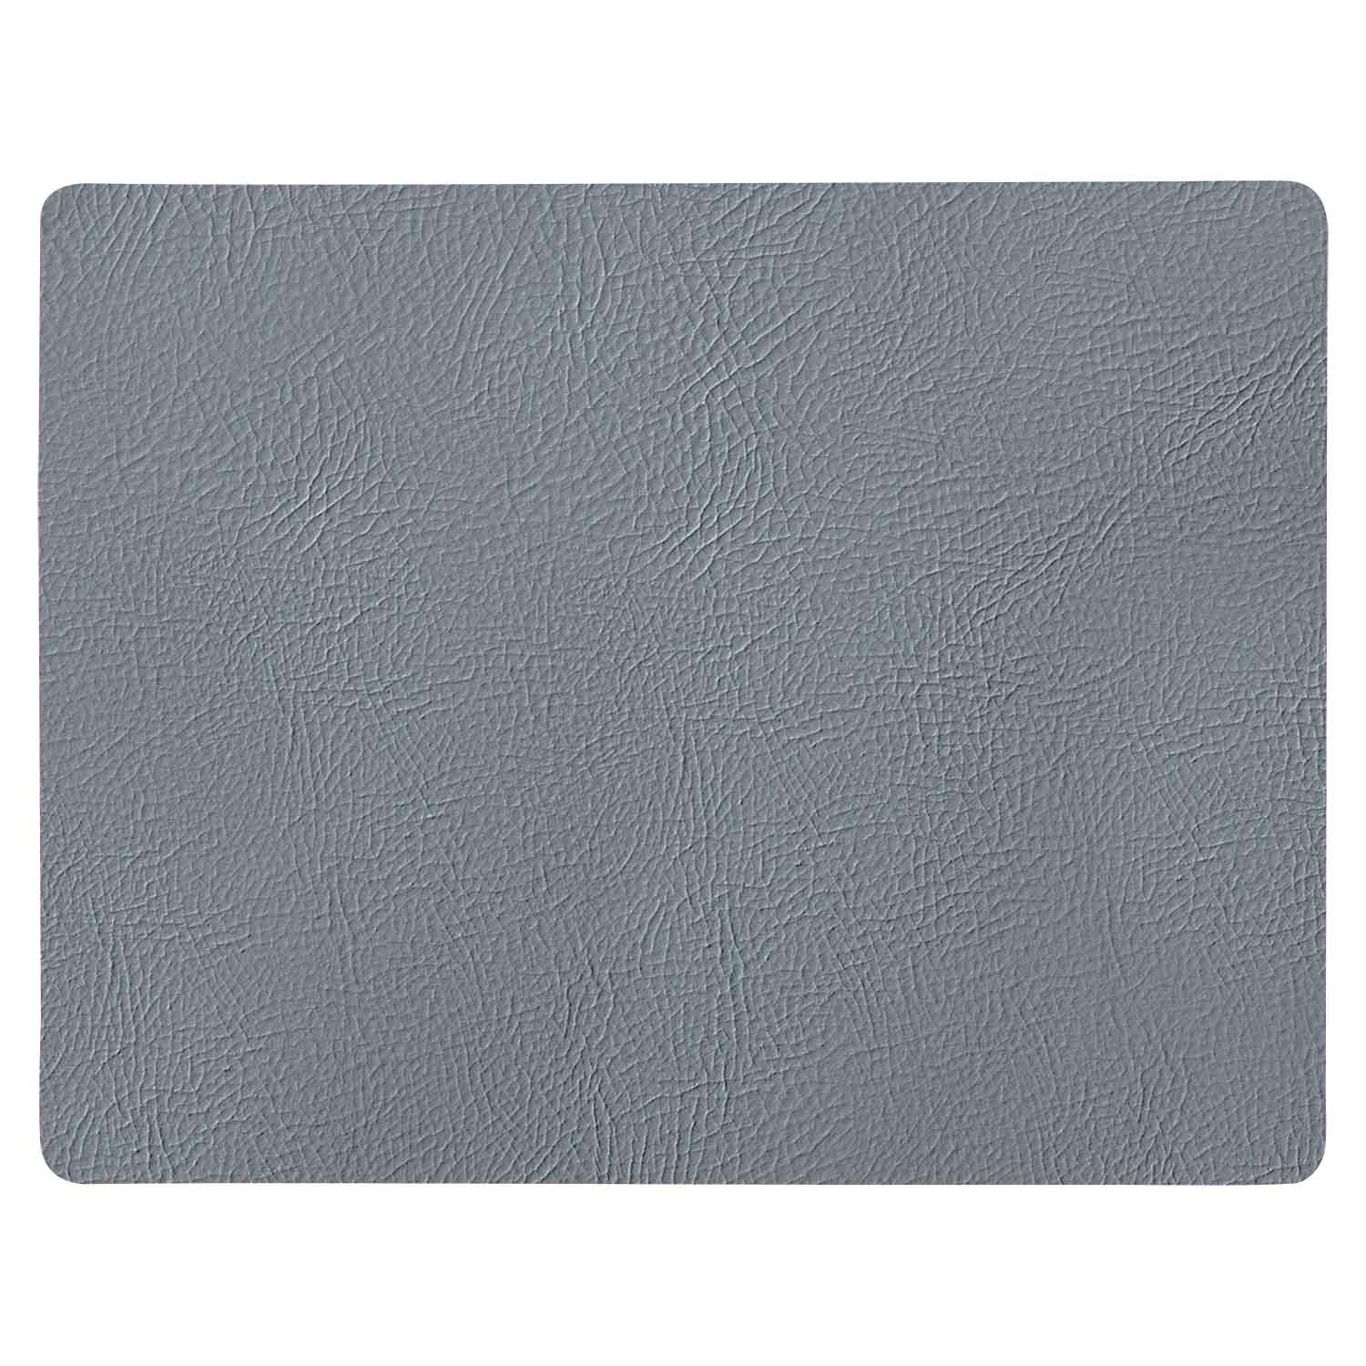 Quadro Placemat 45x35 cm, Grey